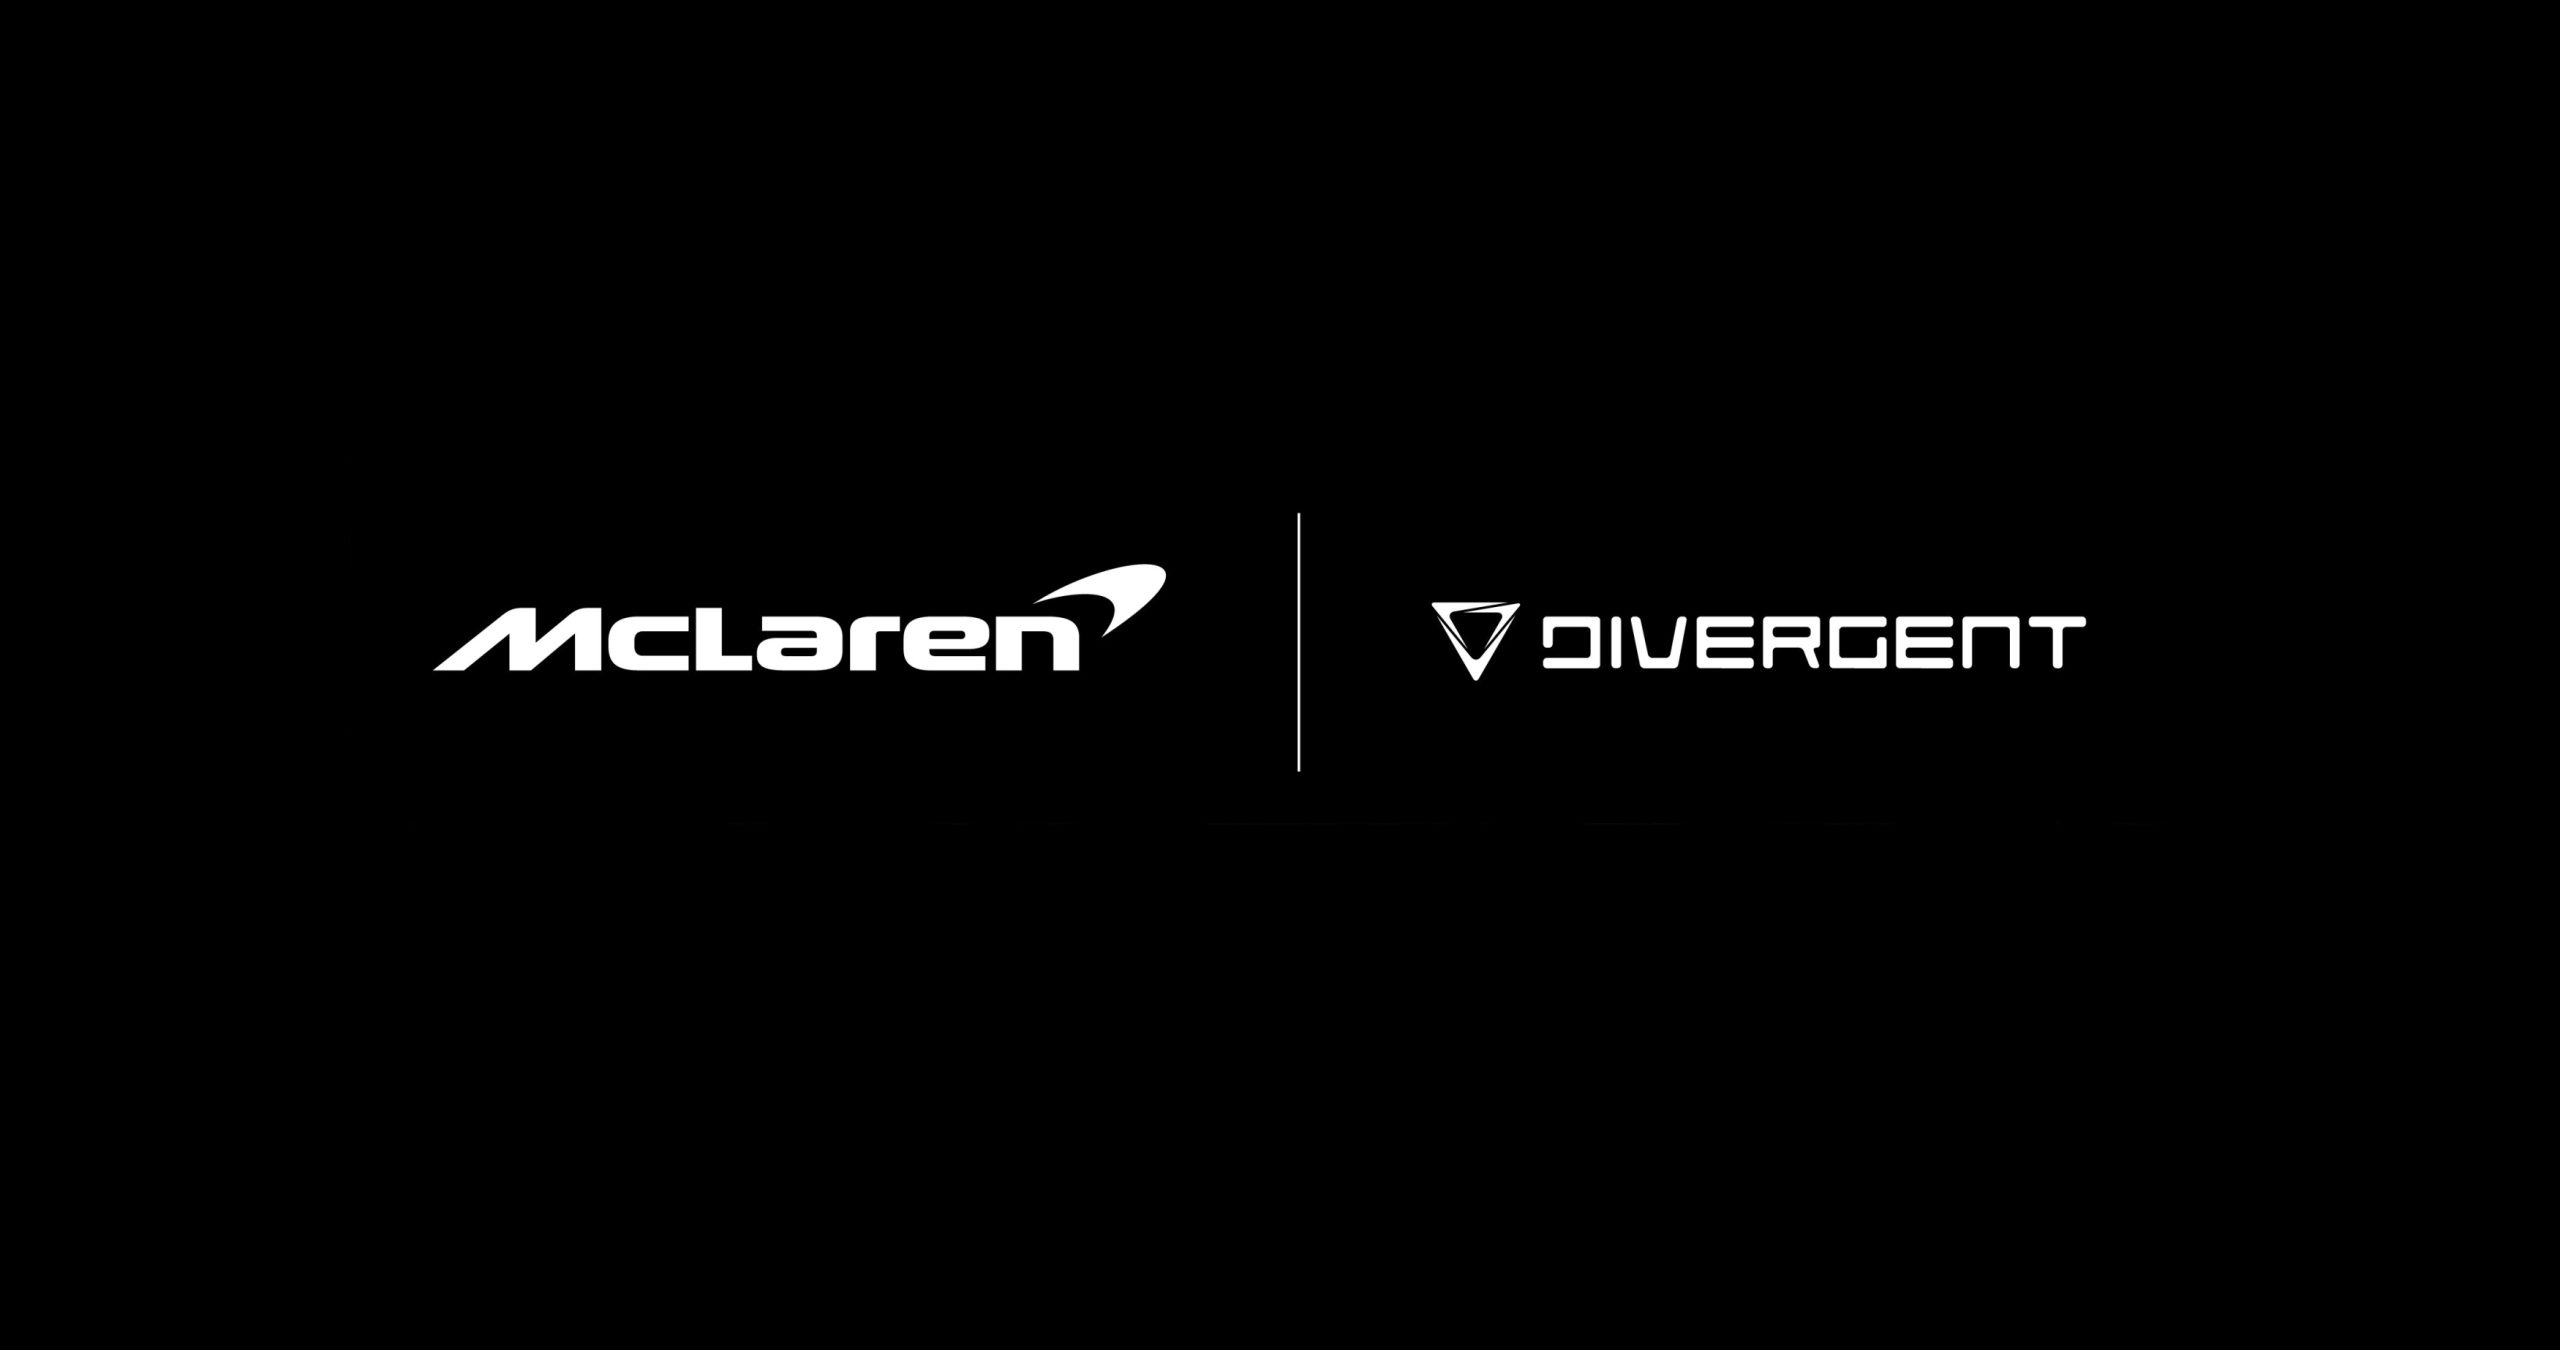 McLaren Automotive and Divergent announce collaboration for additive manufacturing advancement